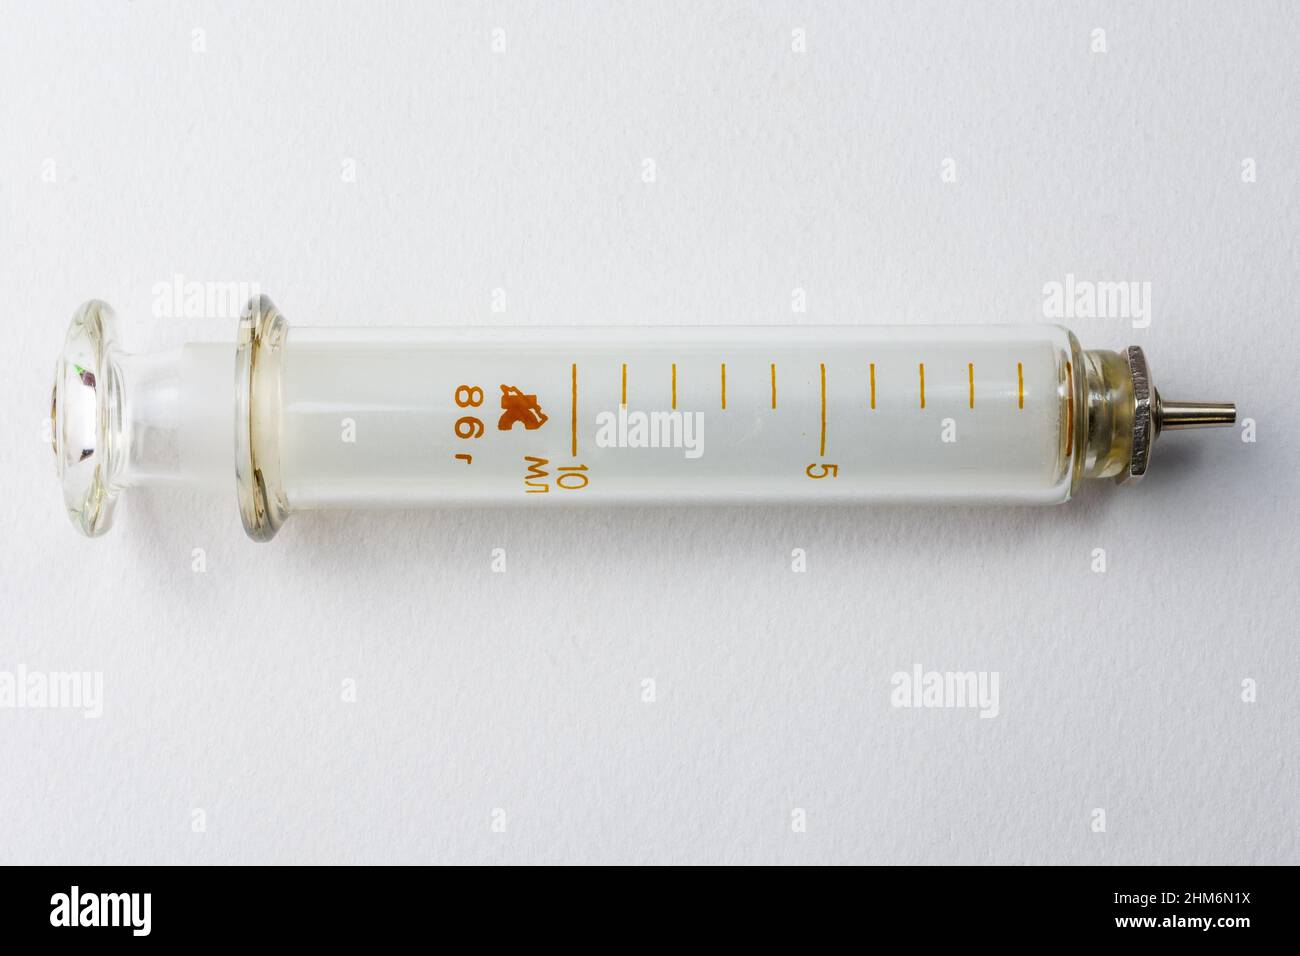 Old Soviet era 10 ml glass syringe Stock Photo